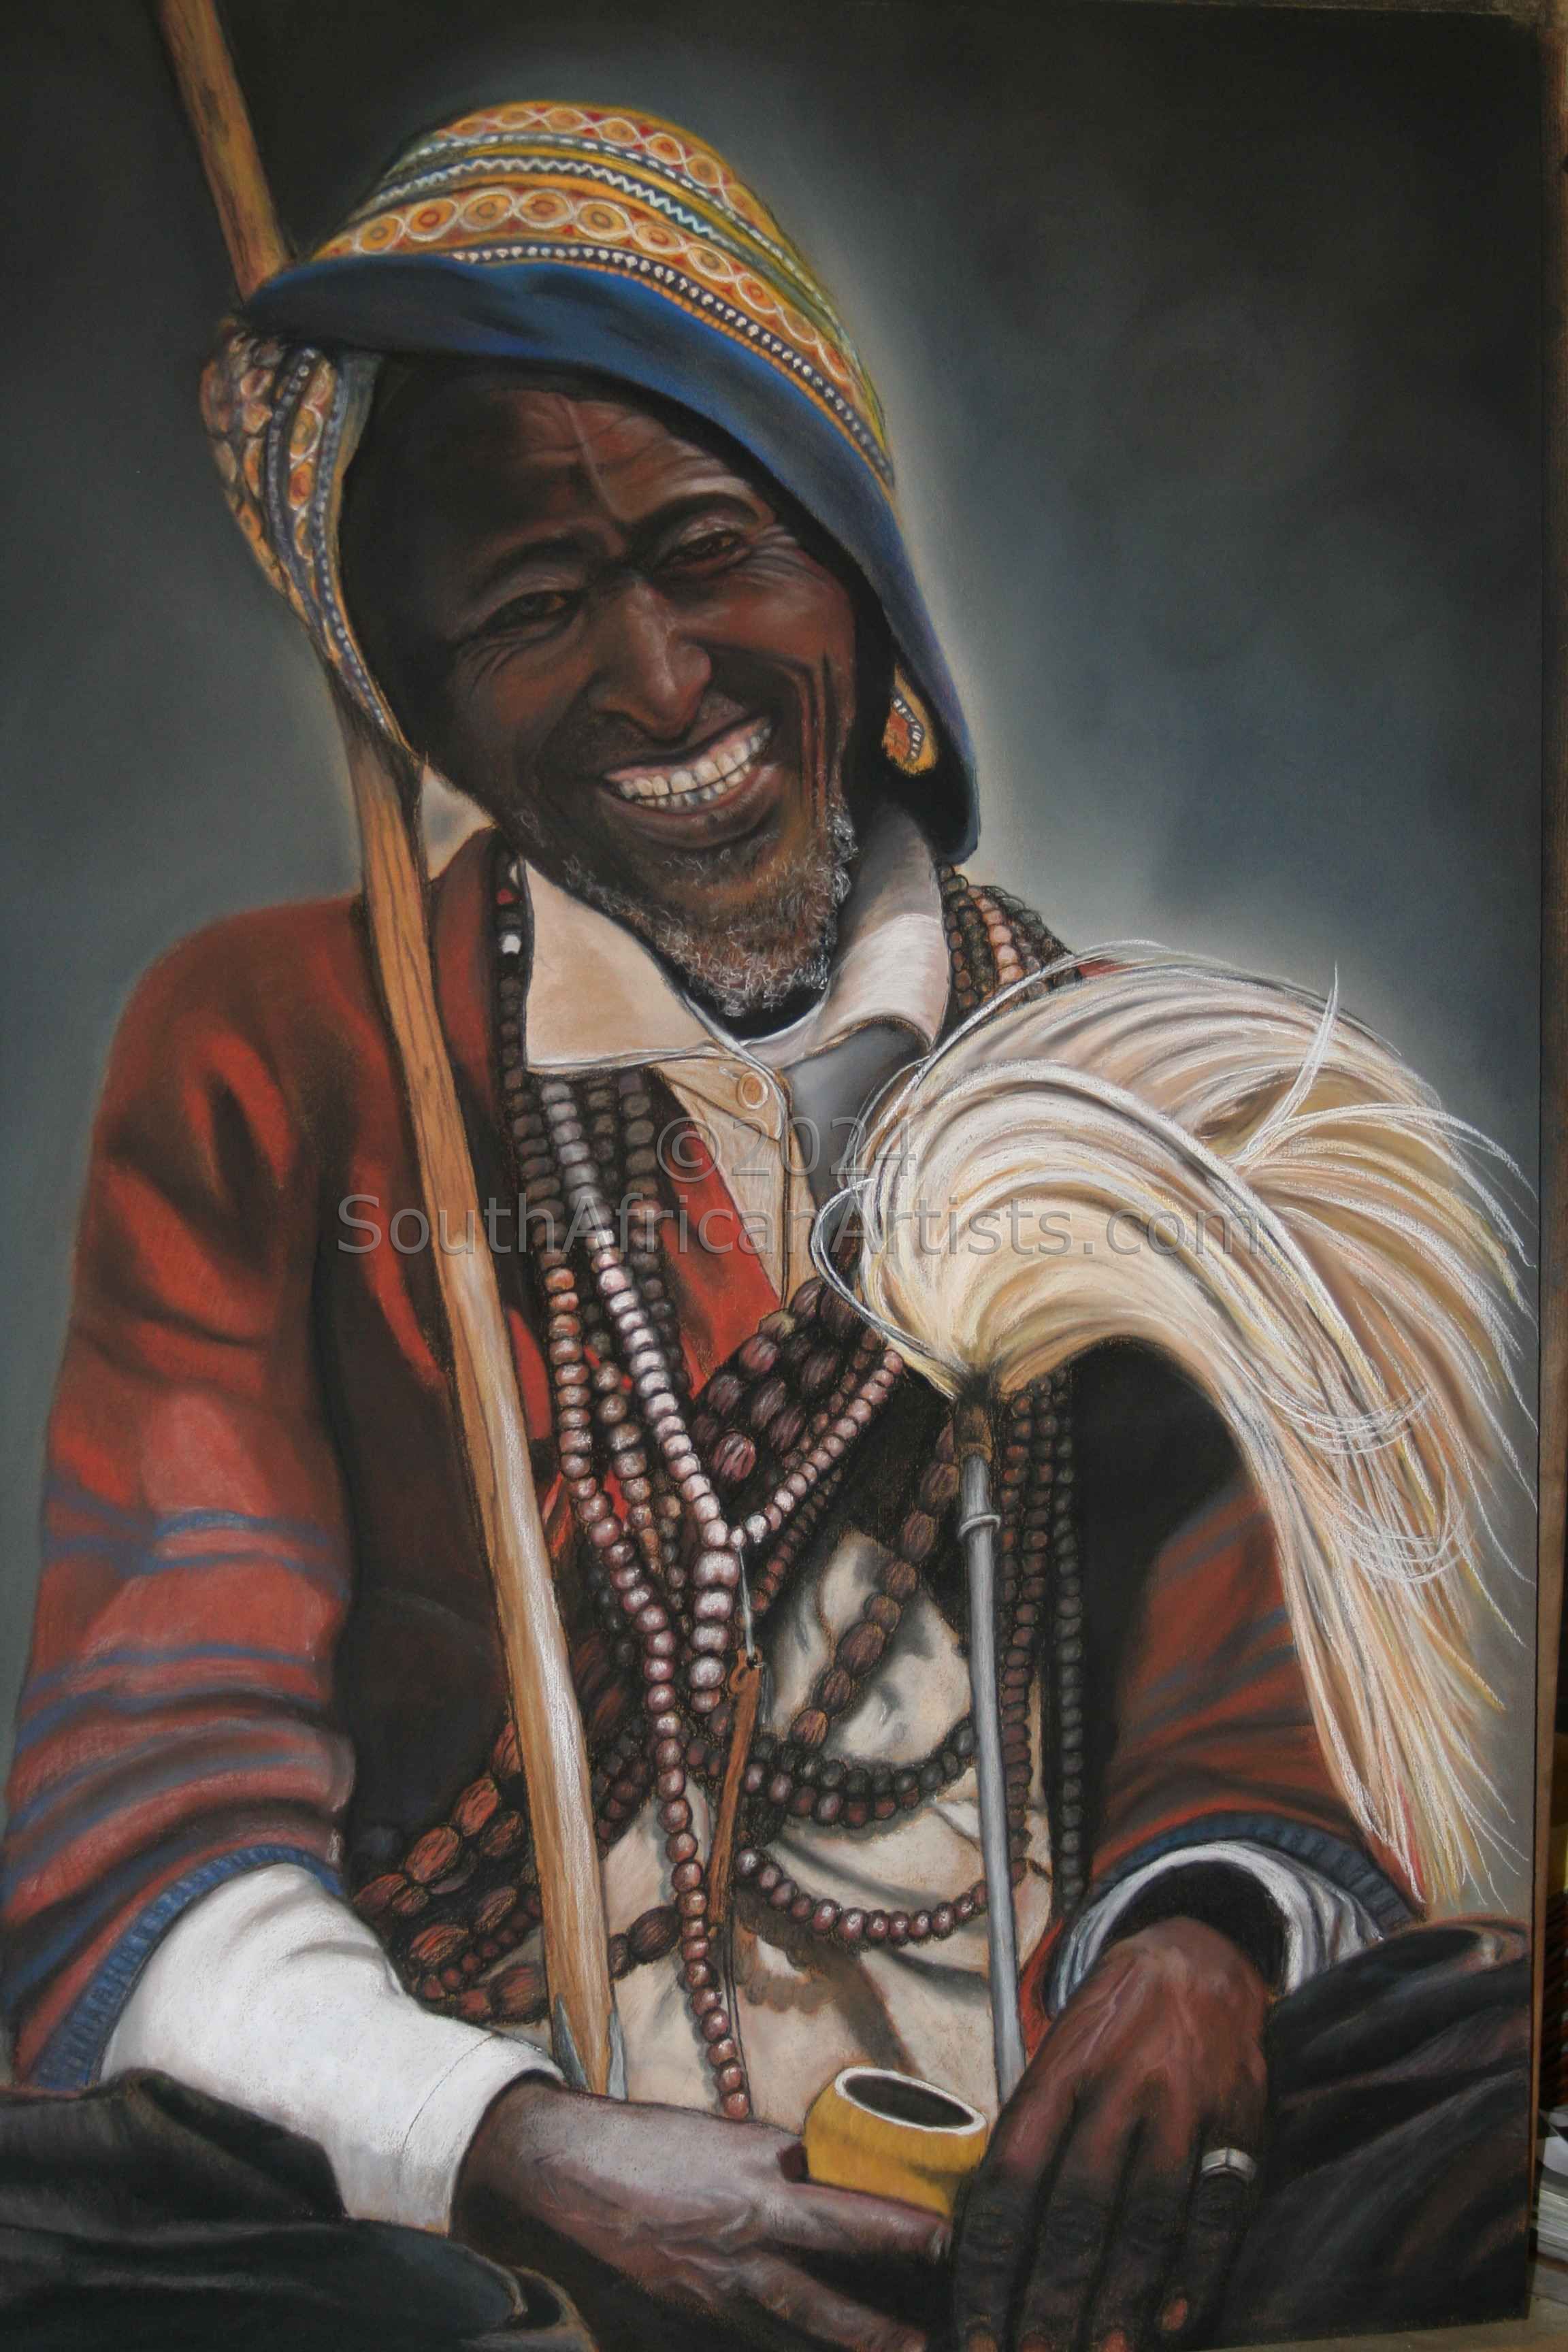 An Old African Gypsy Man